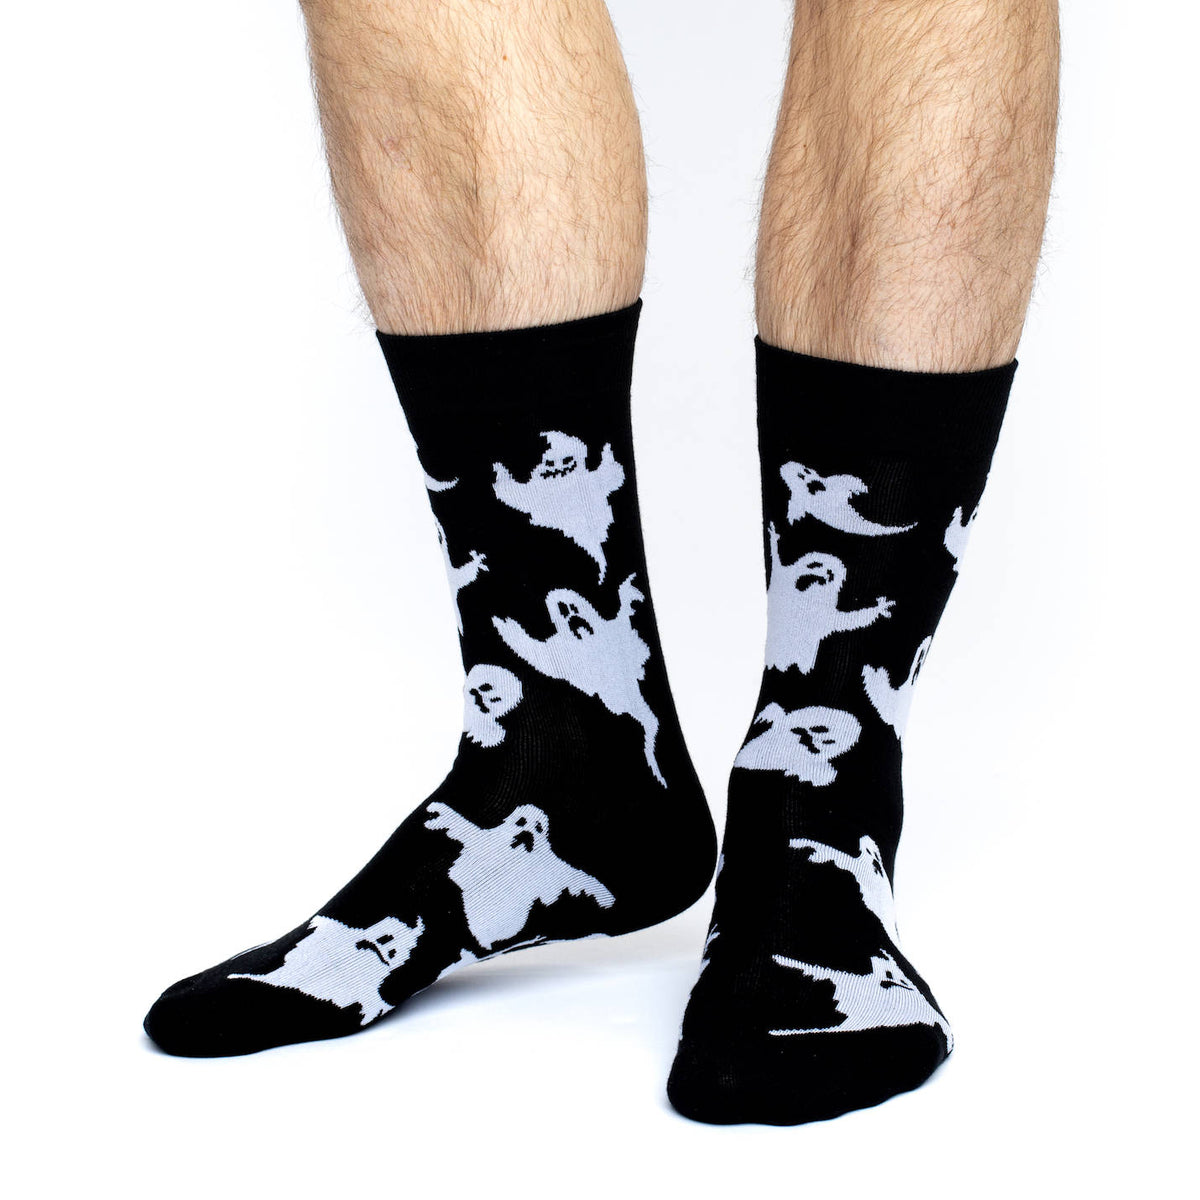 Men's Ghost Socks